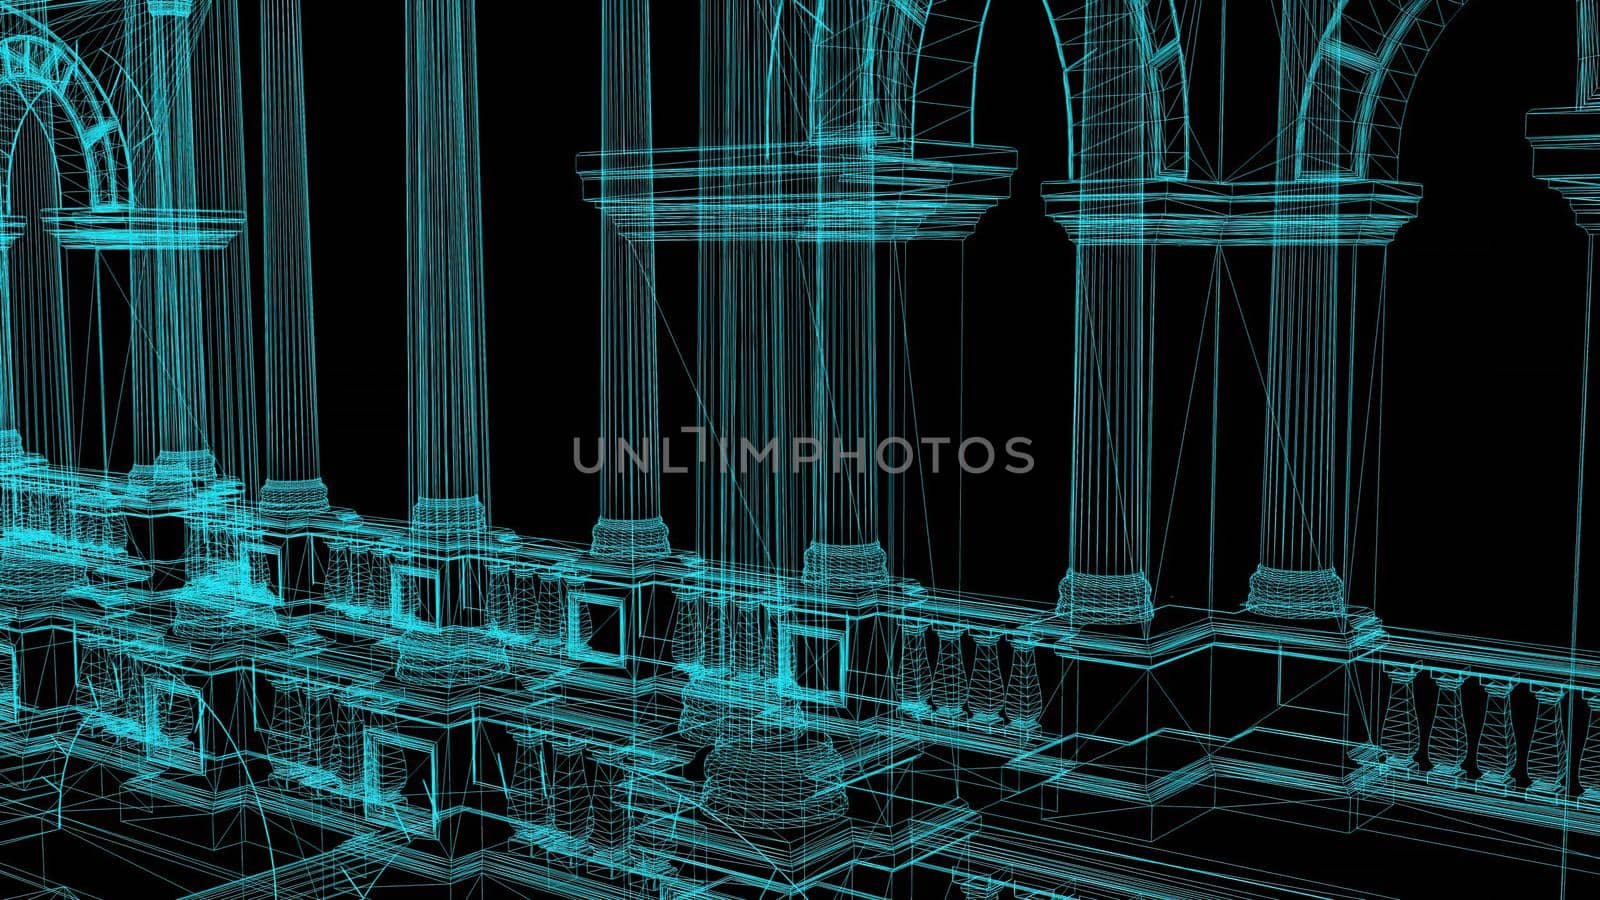 3d illustration - Wire frame Model Of Pompous Palace With Columns  by vitanovski